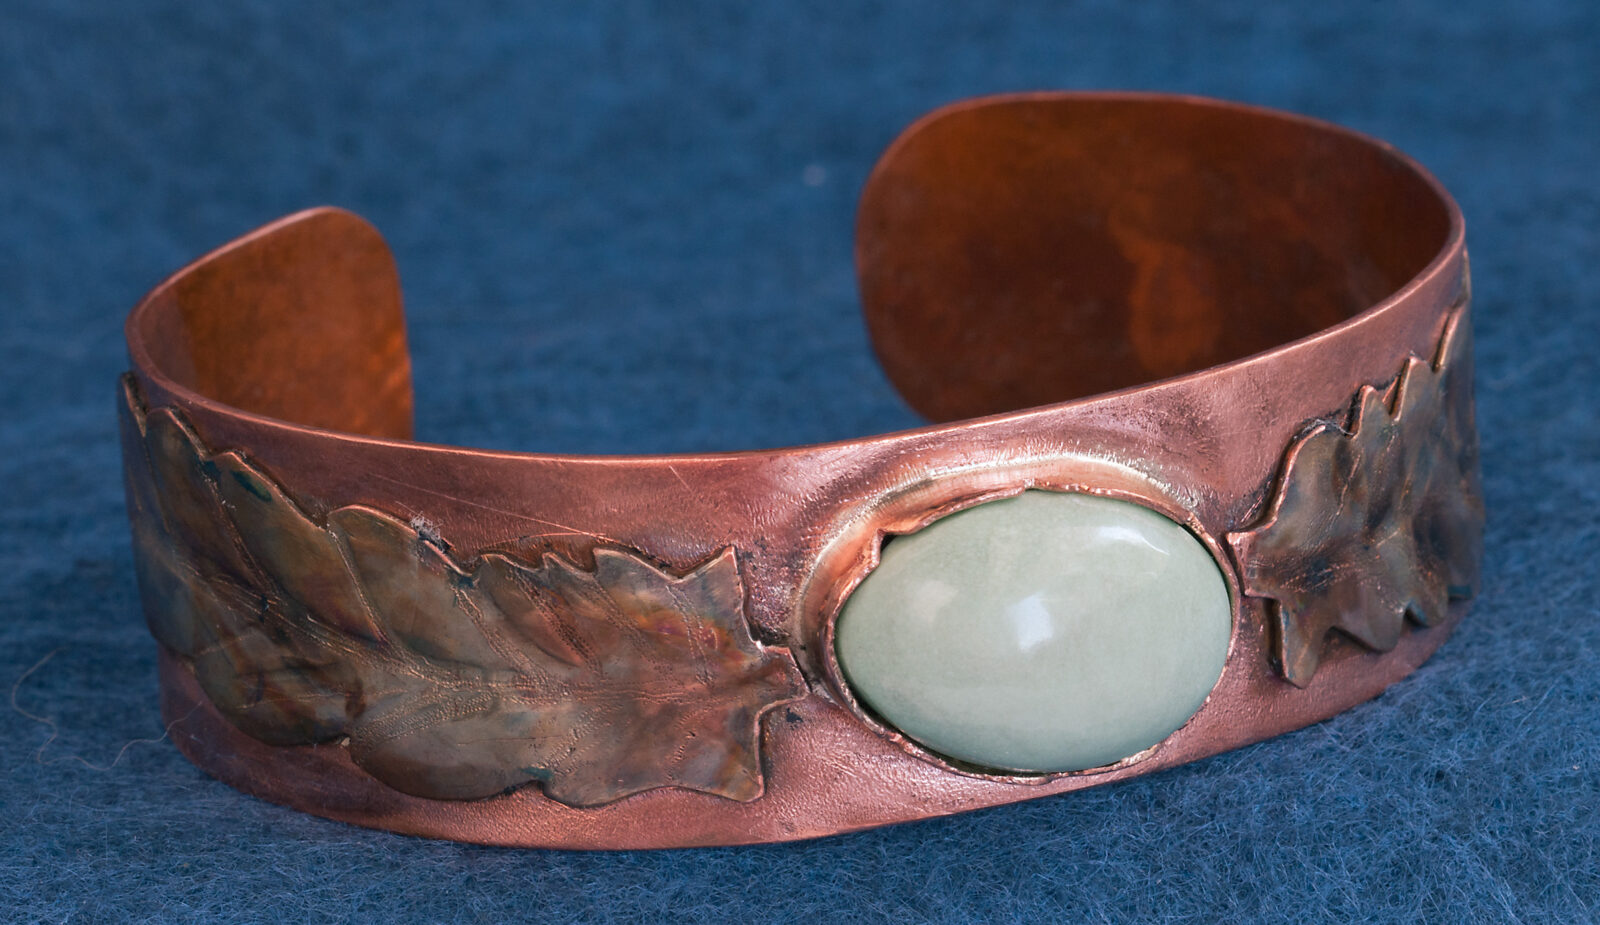 Copper cuff bracelet with leaf decoration, soft green stone